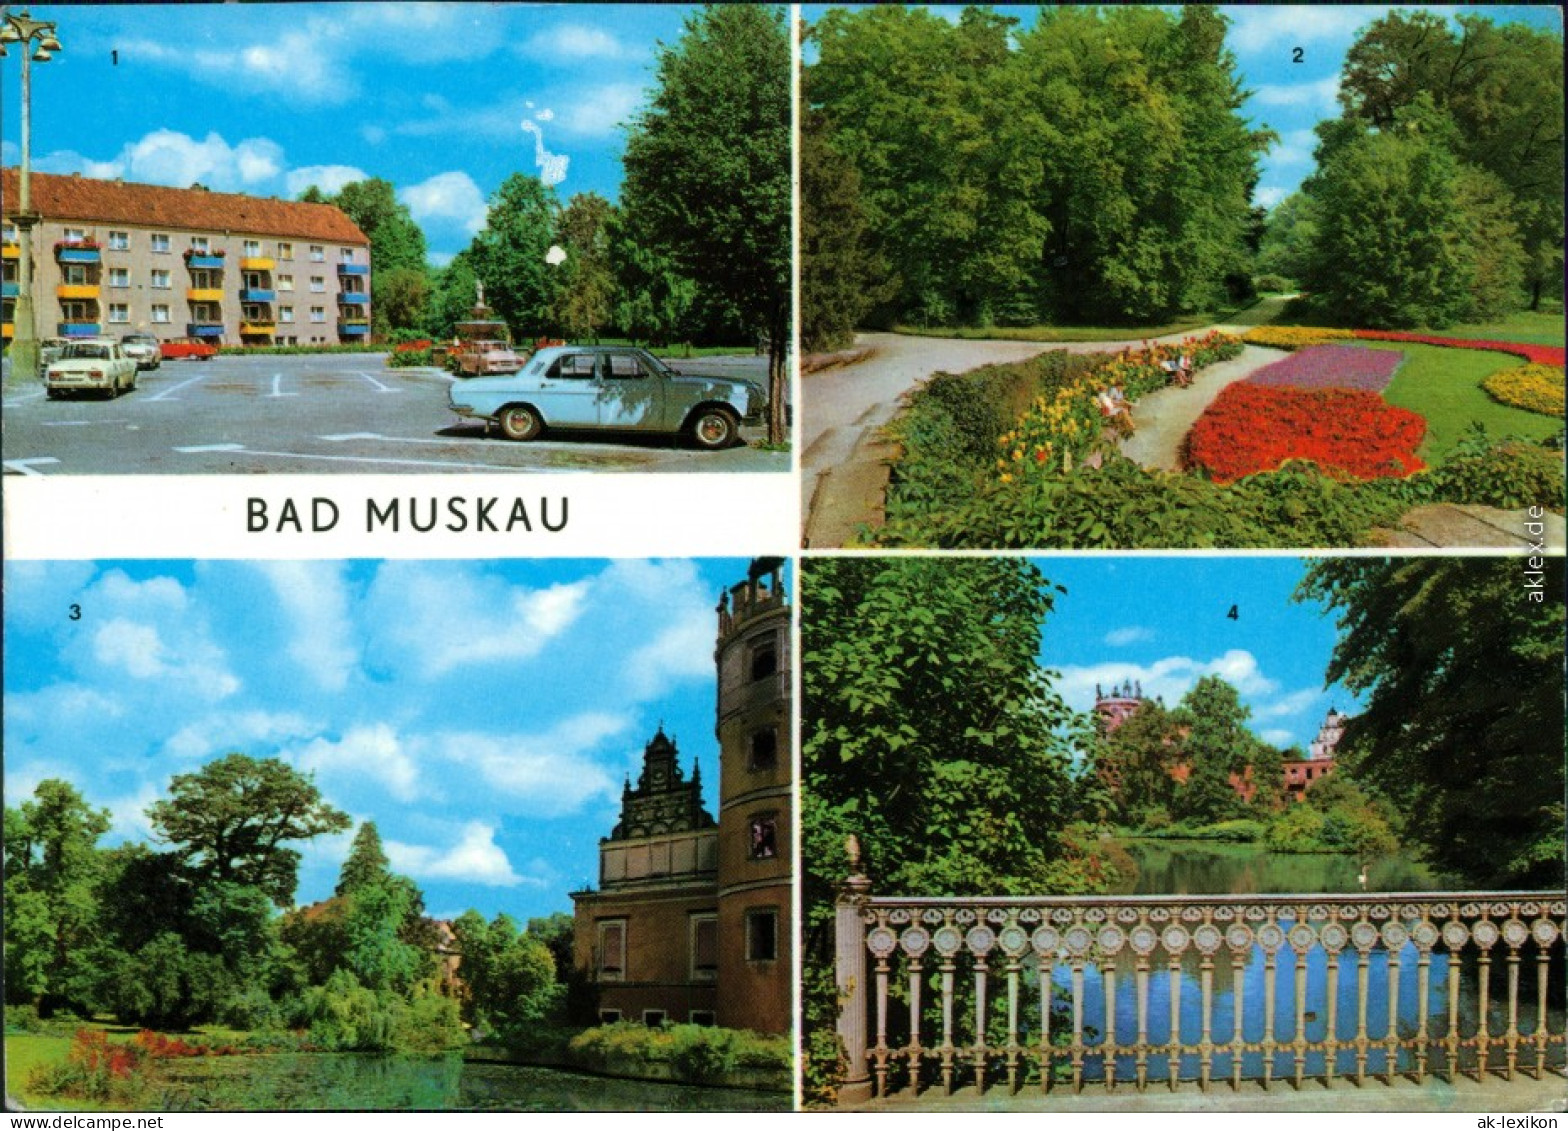 Bad Muskau Mužakow 1. Platz Des Friedens, 2. Park, 3. Blick Zum Moorbad,  1977 - Bad Muskau